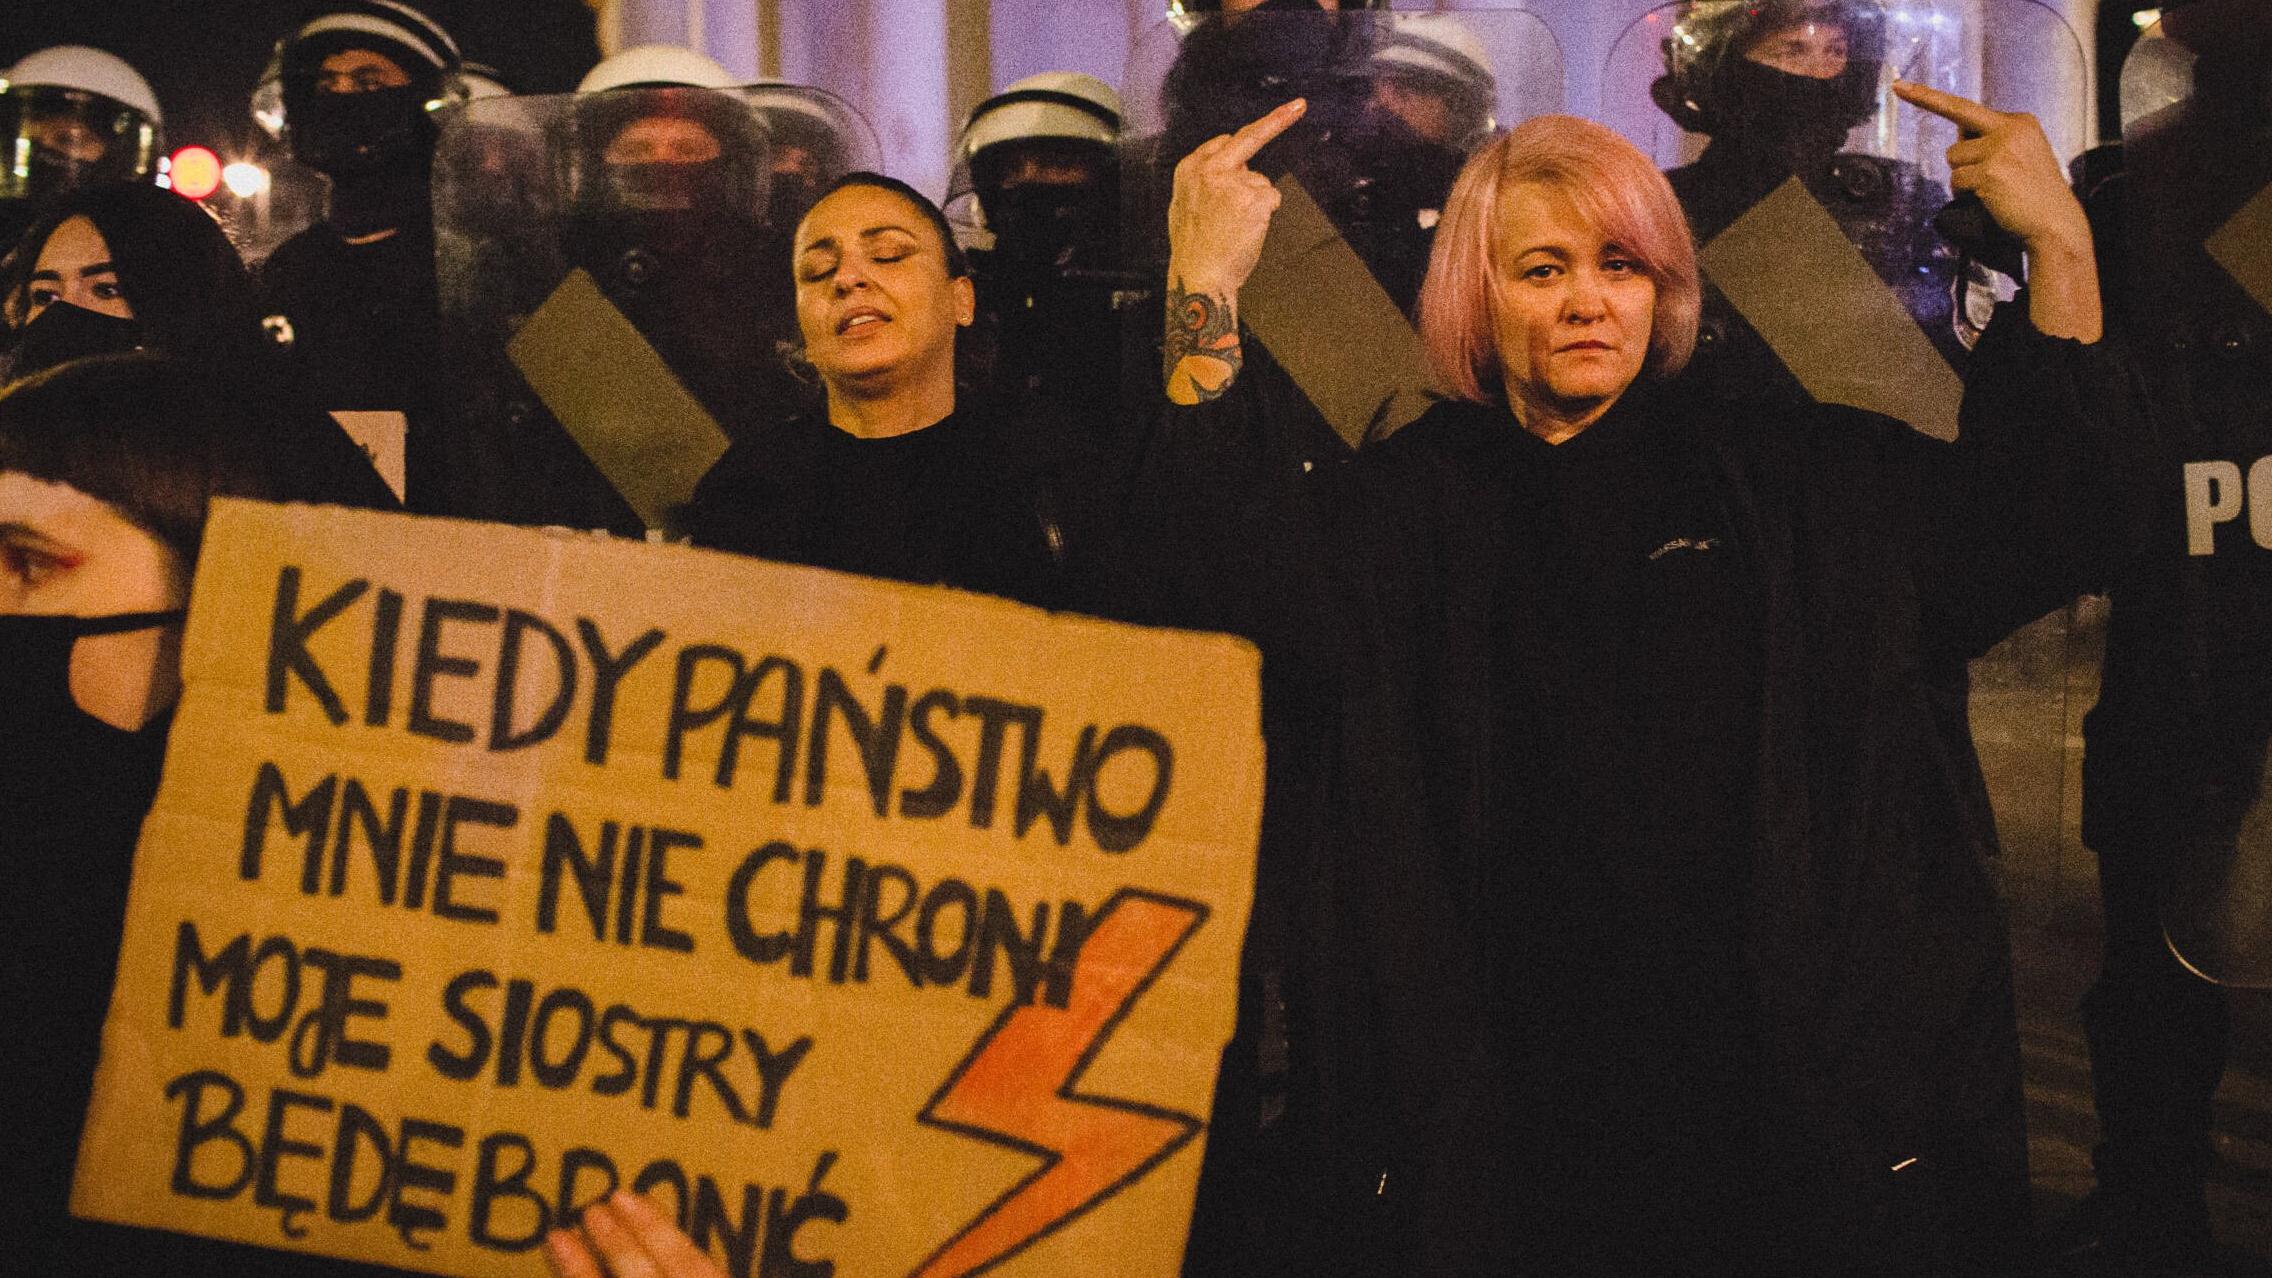 Warszawa, protest 26.10.2020